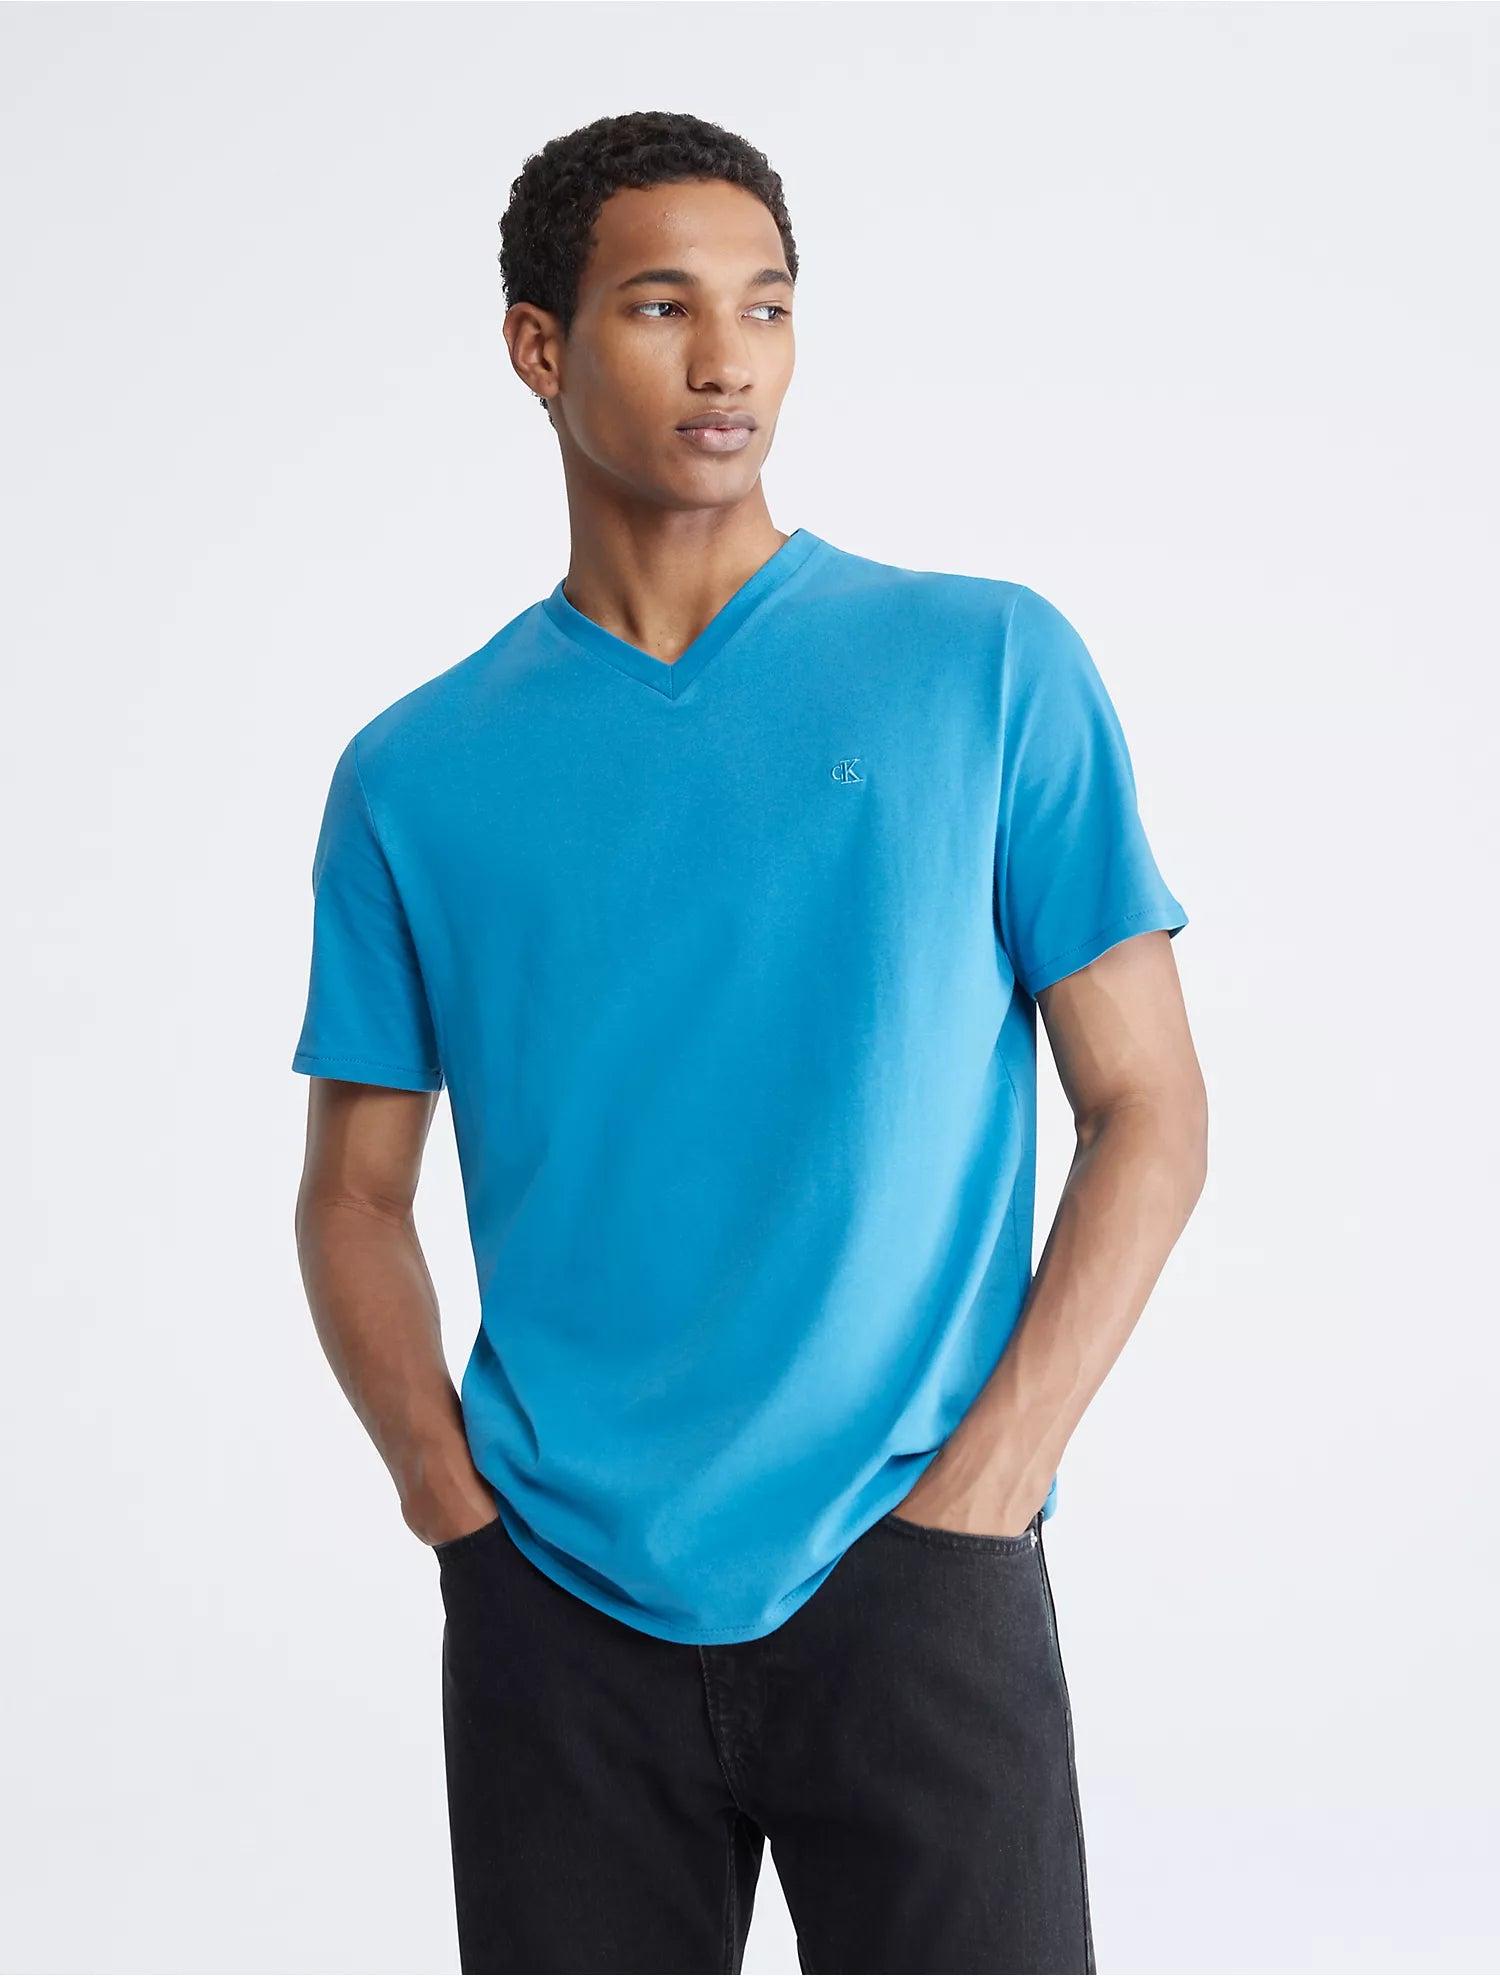 Calvin Klein Smooth Cotton Solid V-Neck T-Shirt - Men